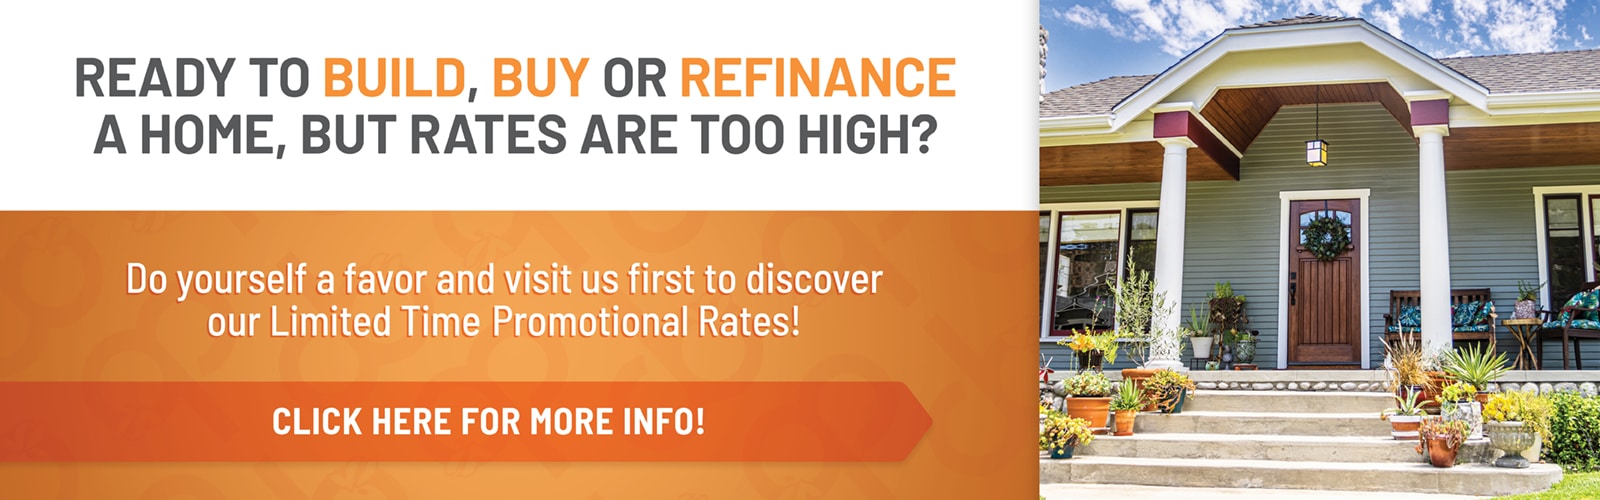 Refinance a home